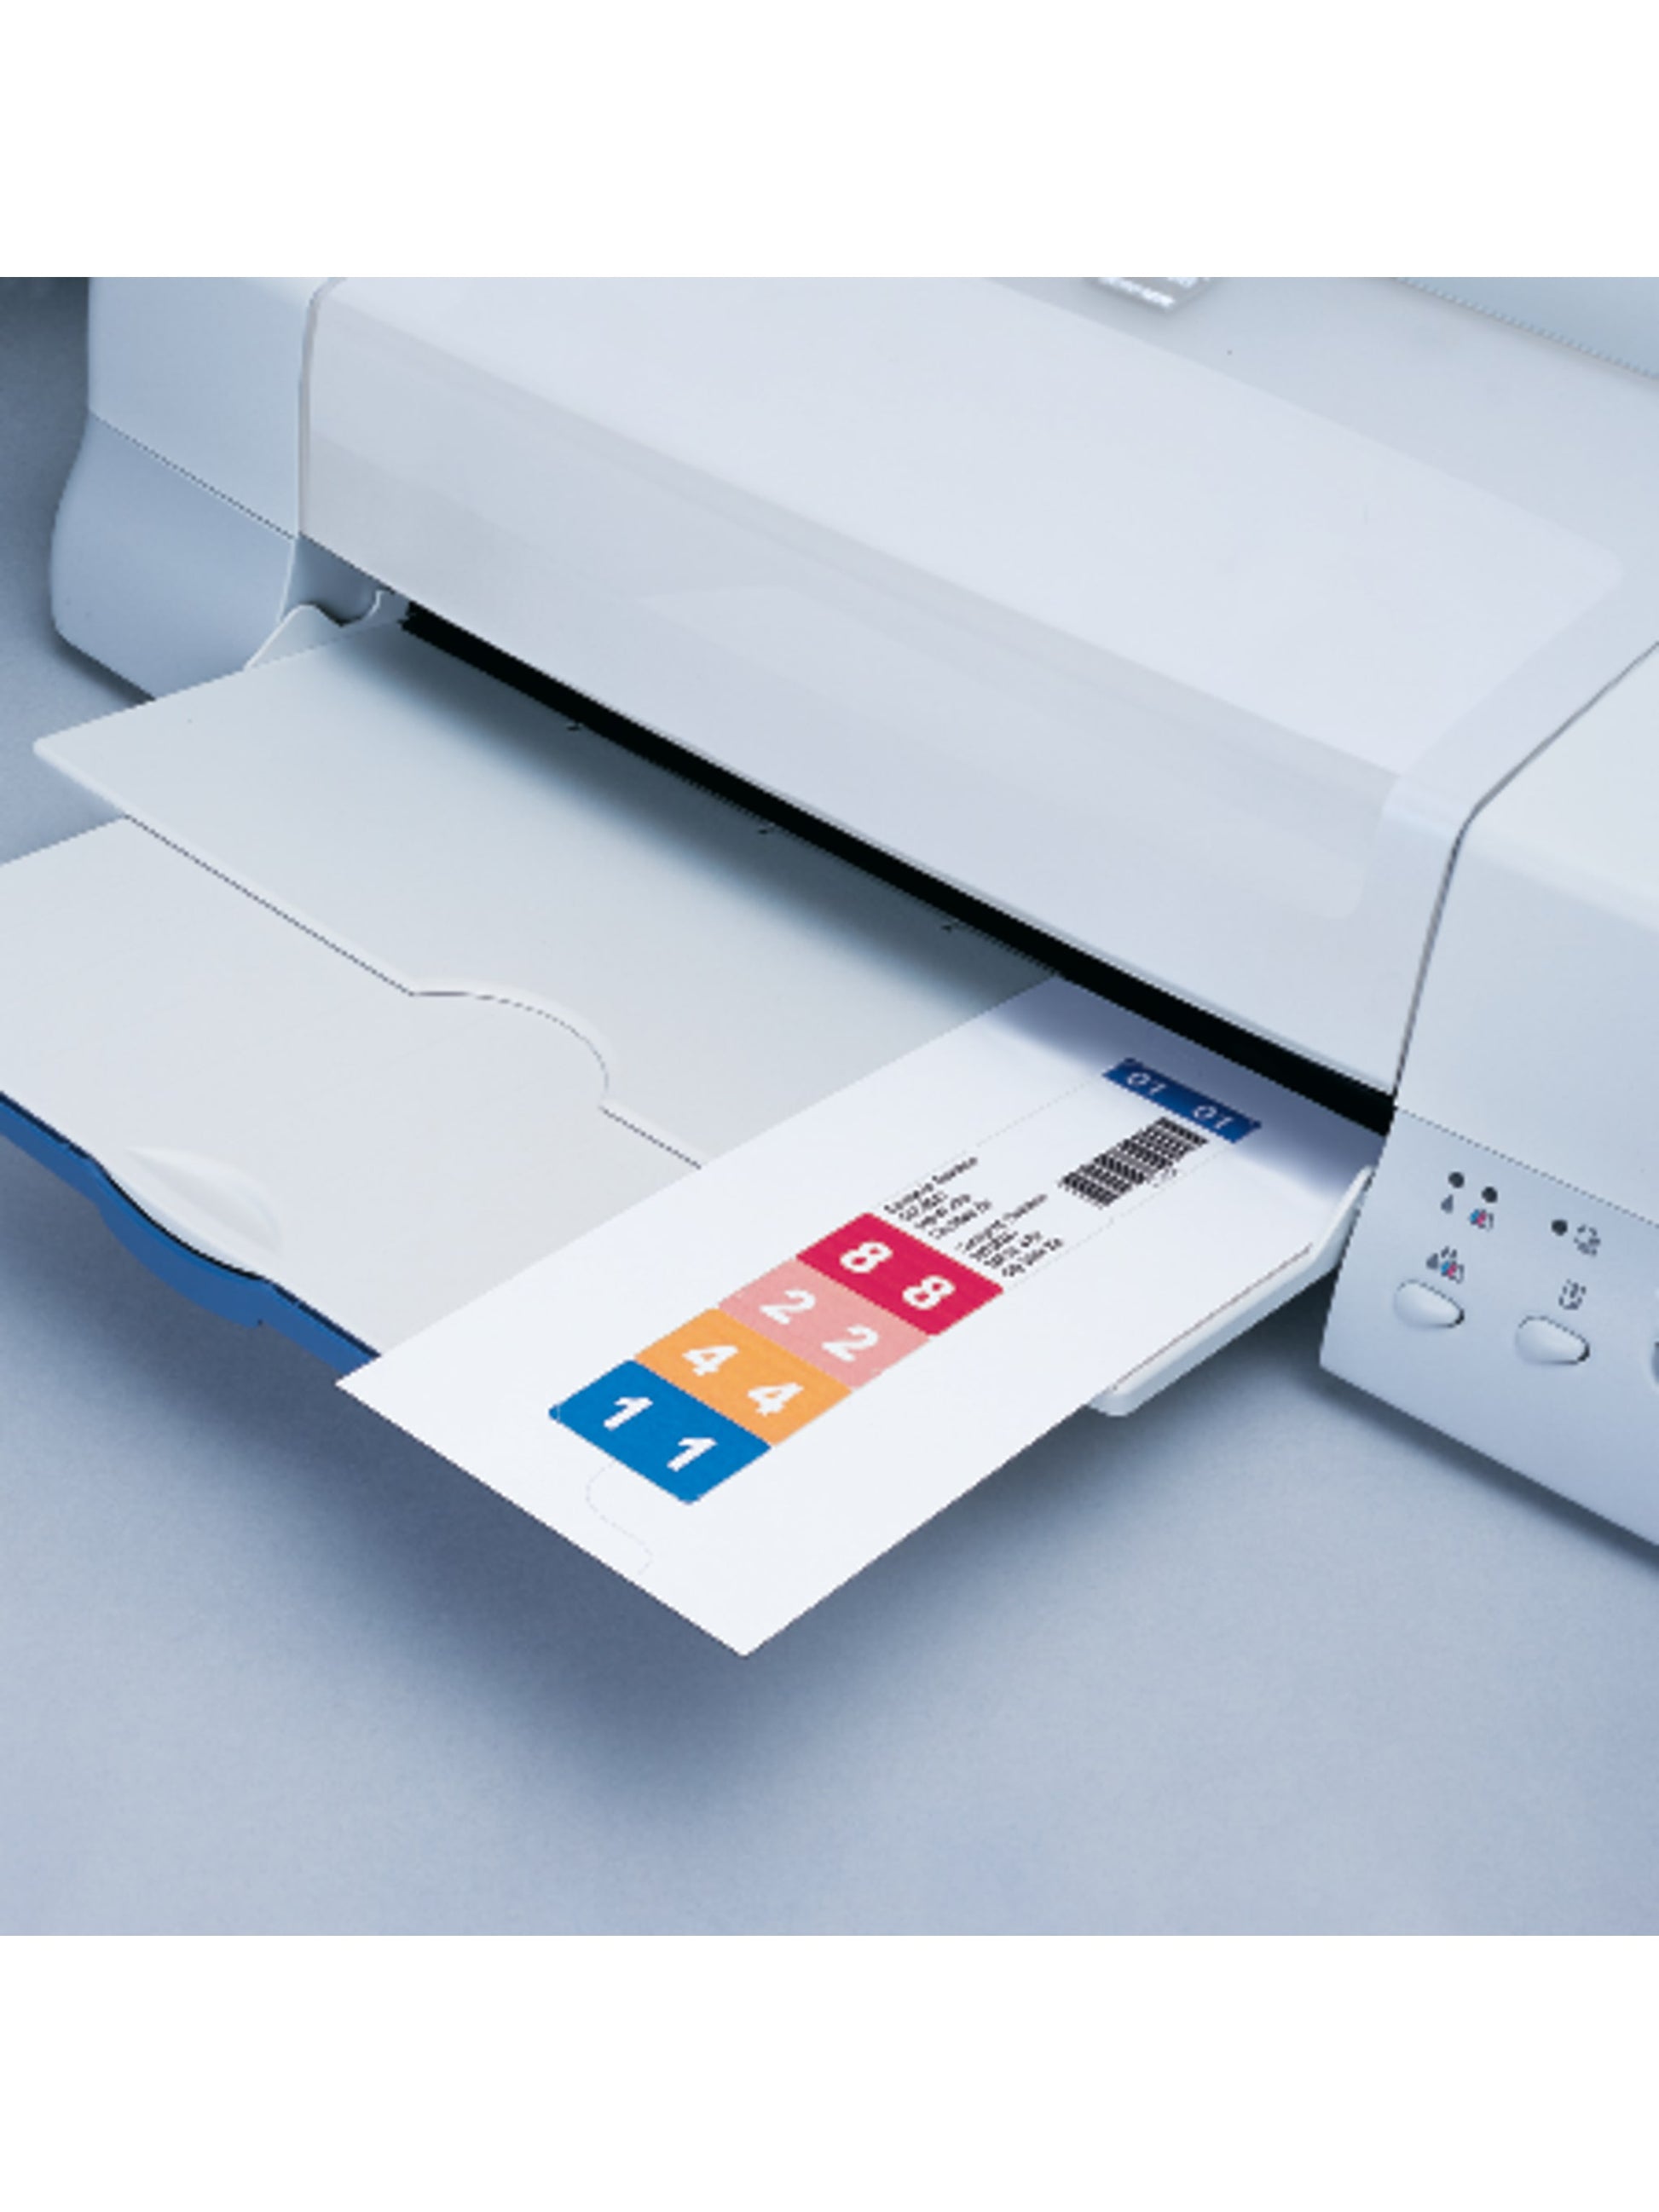 ColorBar®  Inkjet Labels, White Color, 1-1/2”H X 8”W Size, Set of 1, 086486027816